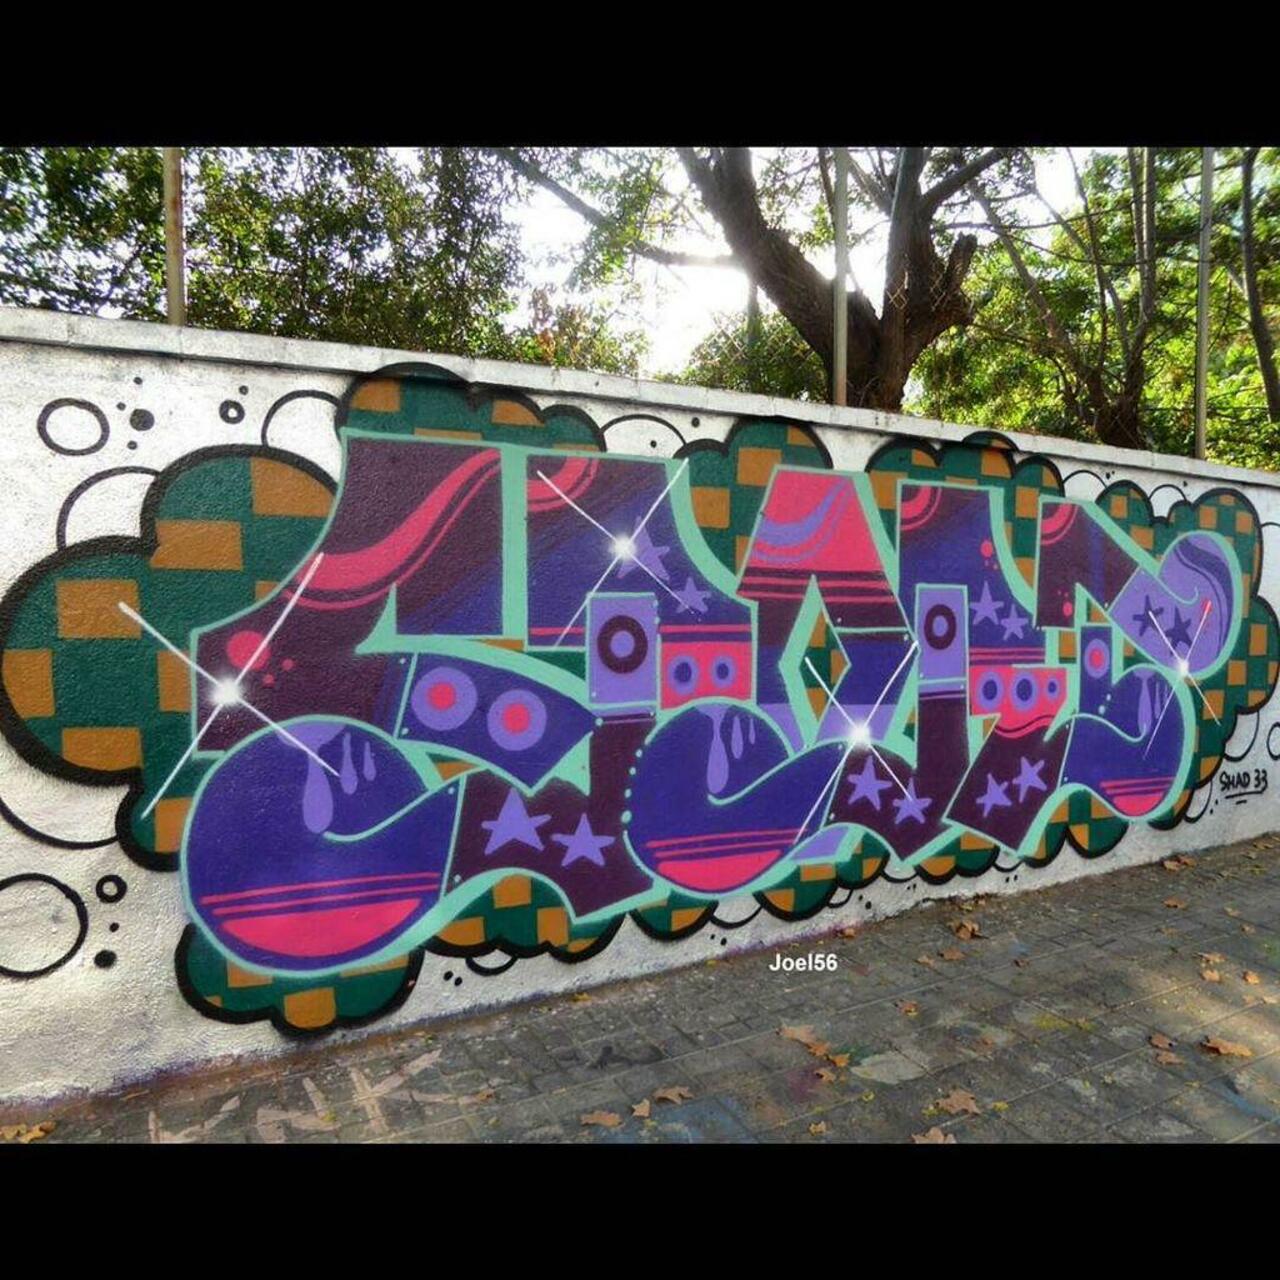 RT @artpushr: via #joan56comjoan "http://bit.ly/1OMBCg7" #graffiti #streetart http://t.co/fuZy713O6t